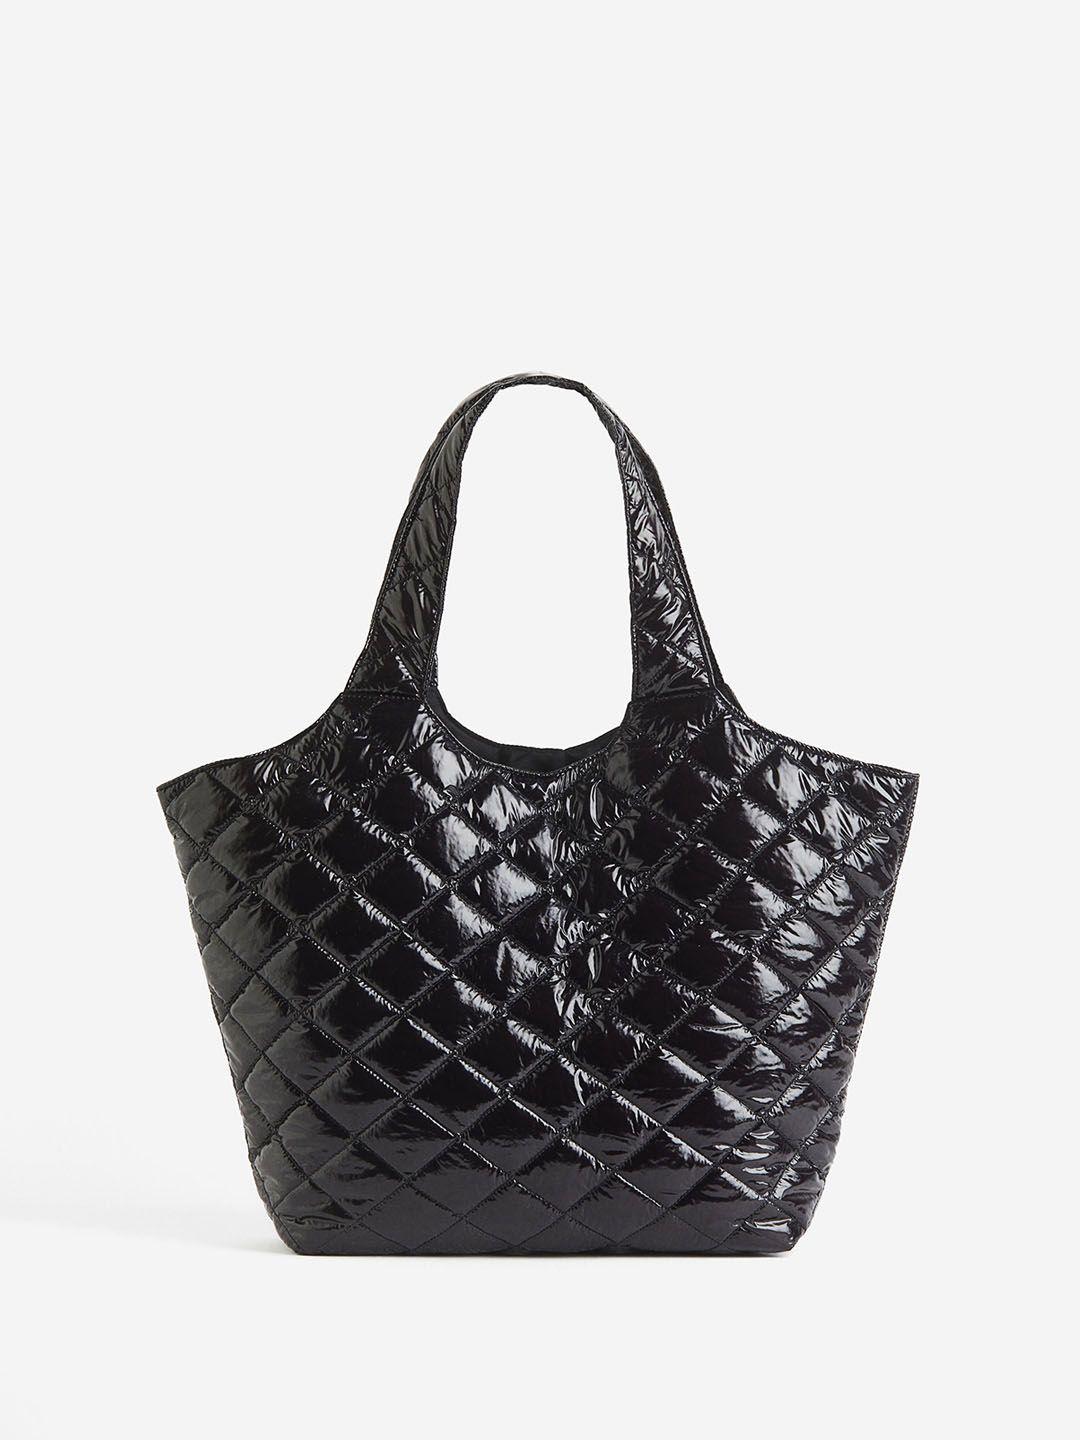 h&m quilted shopper handbags